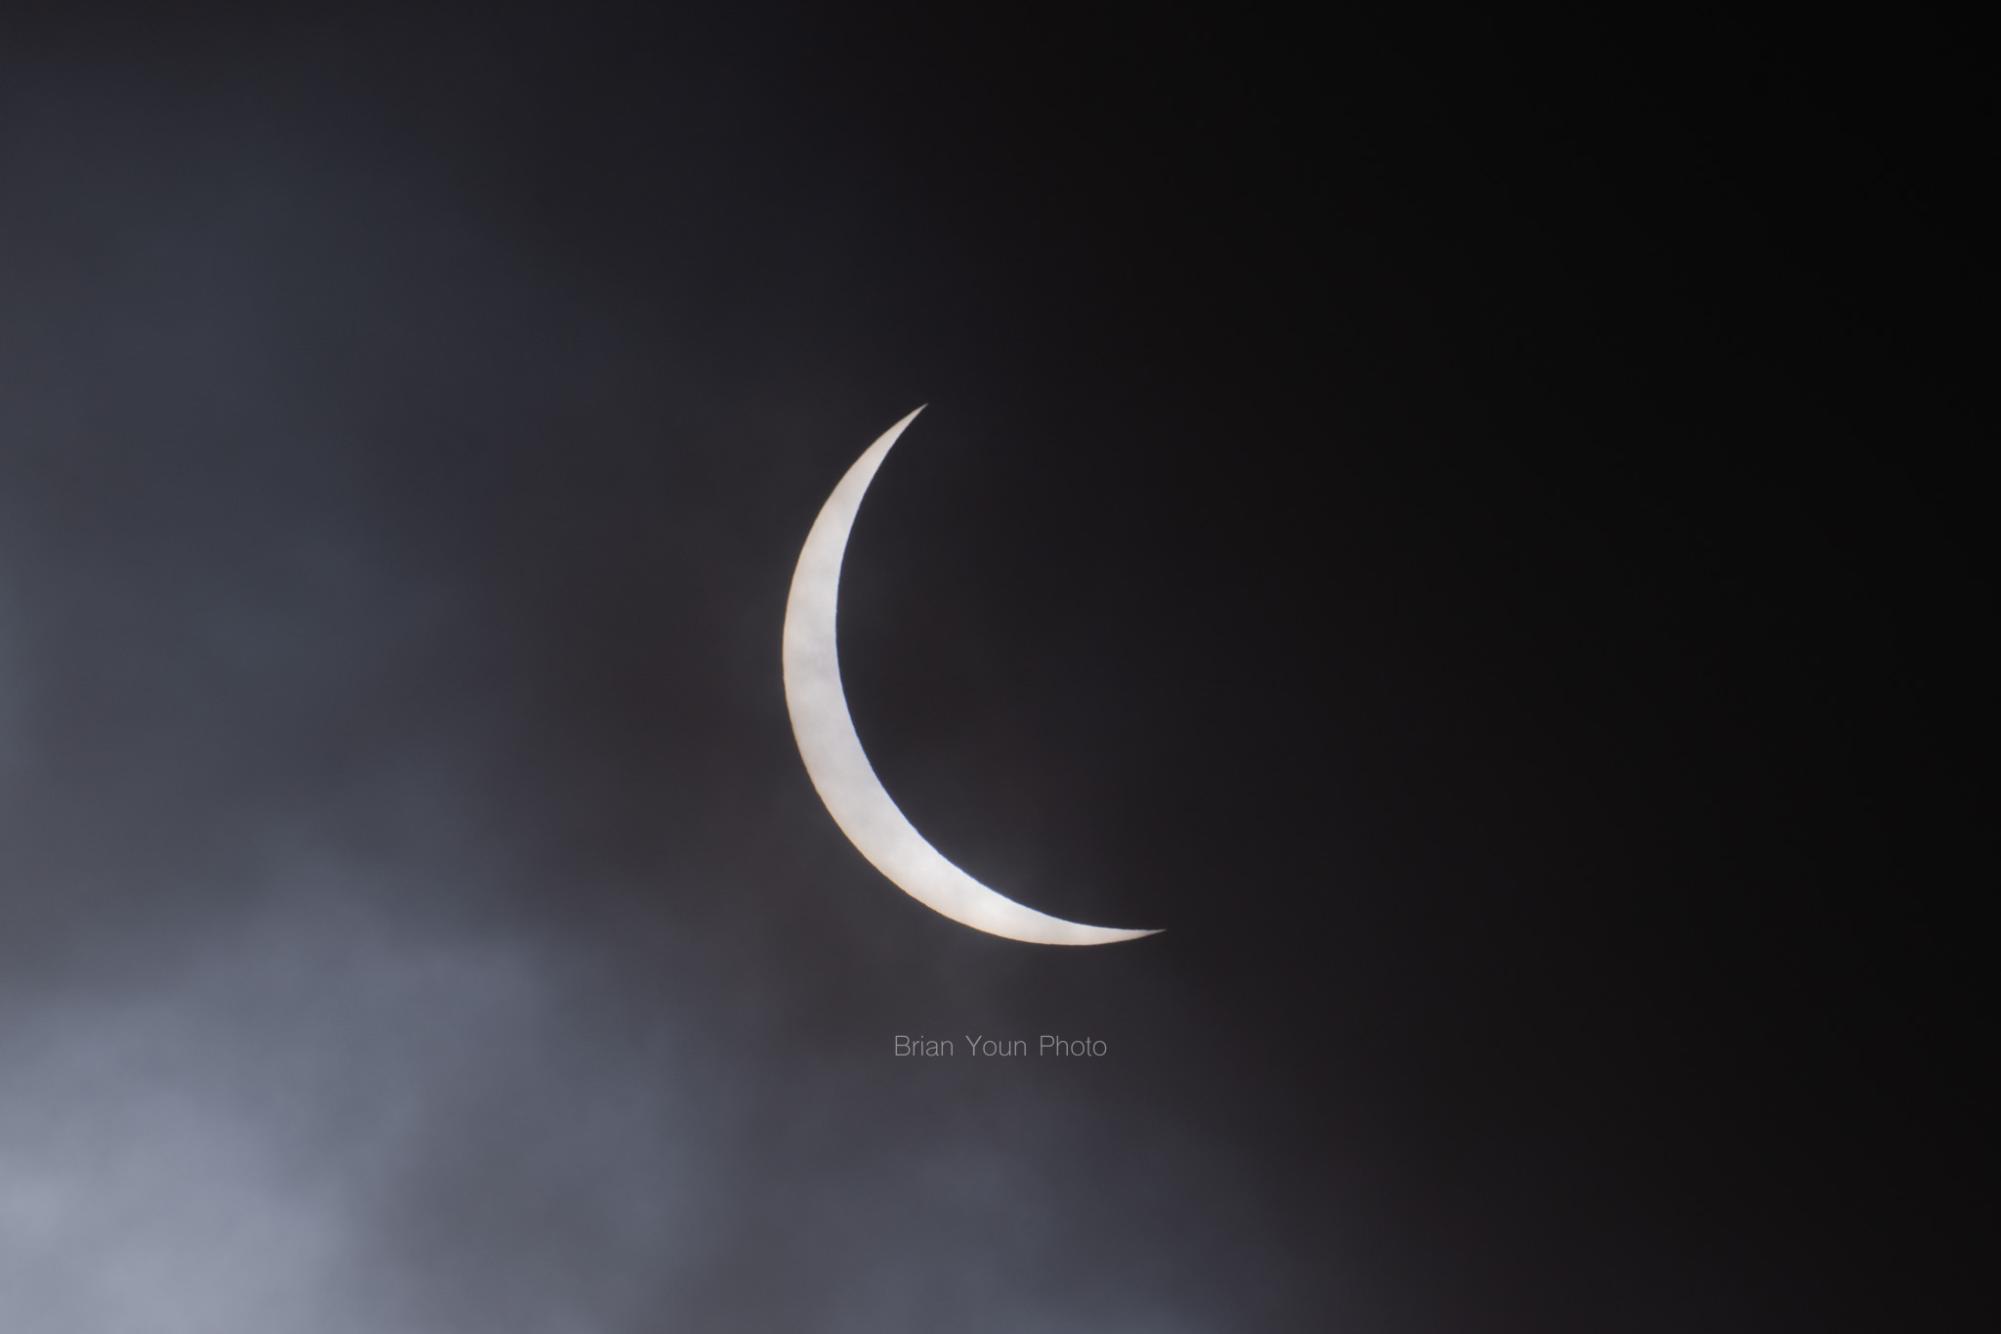 Solar+Snapshot%3A+Mr.+Brian+Youn+Photographs+Total+Eclipse